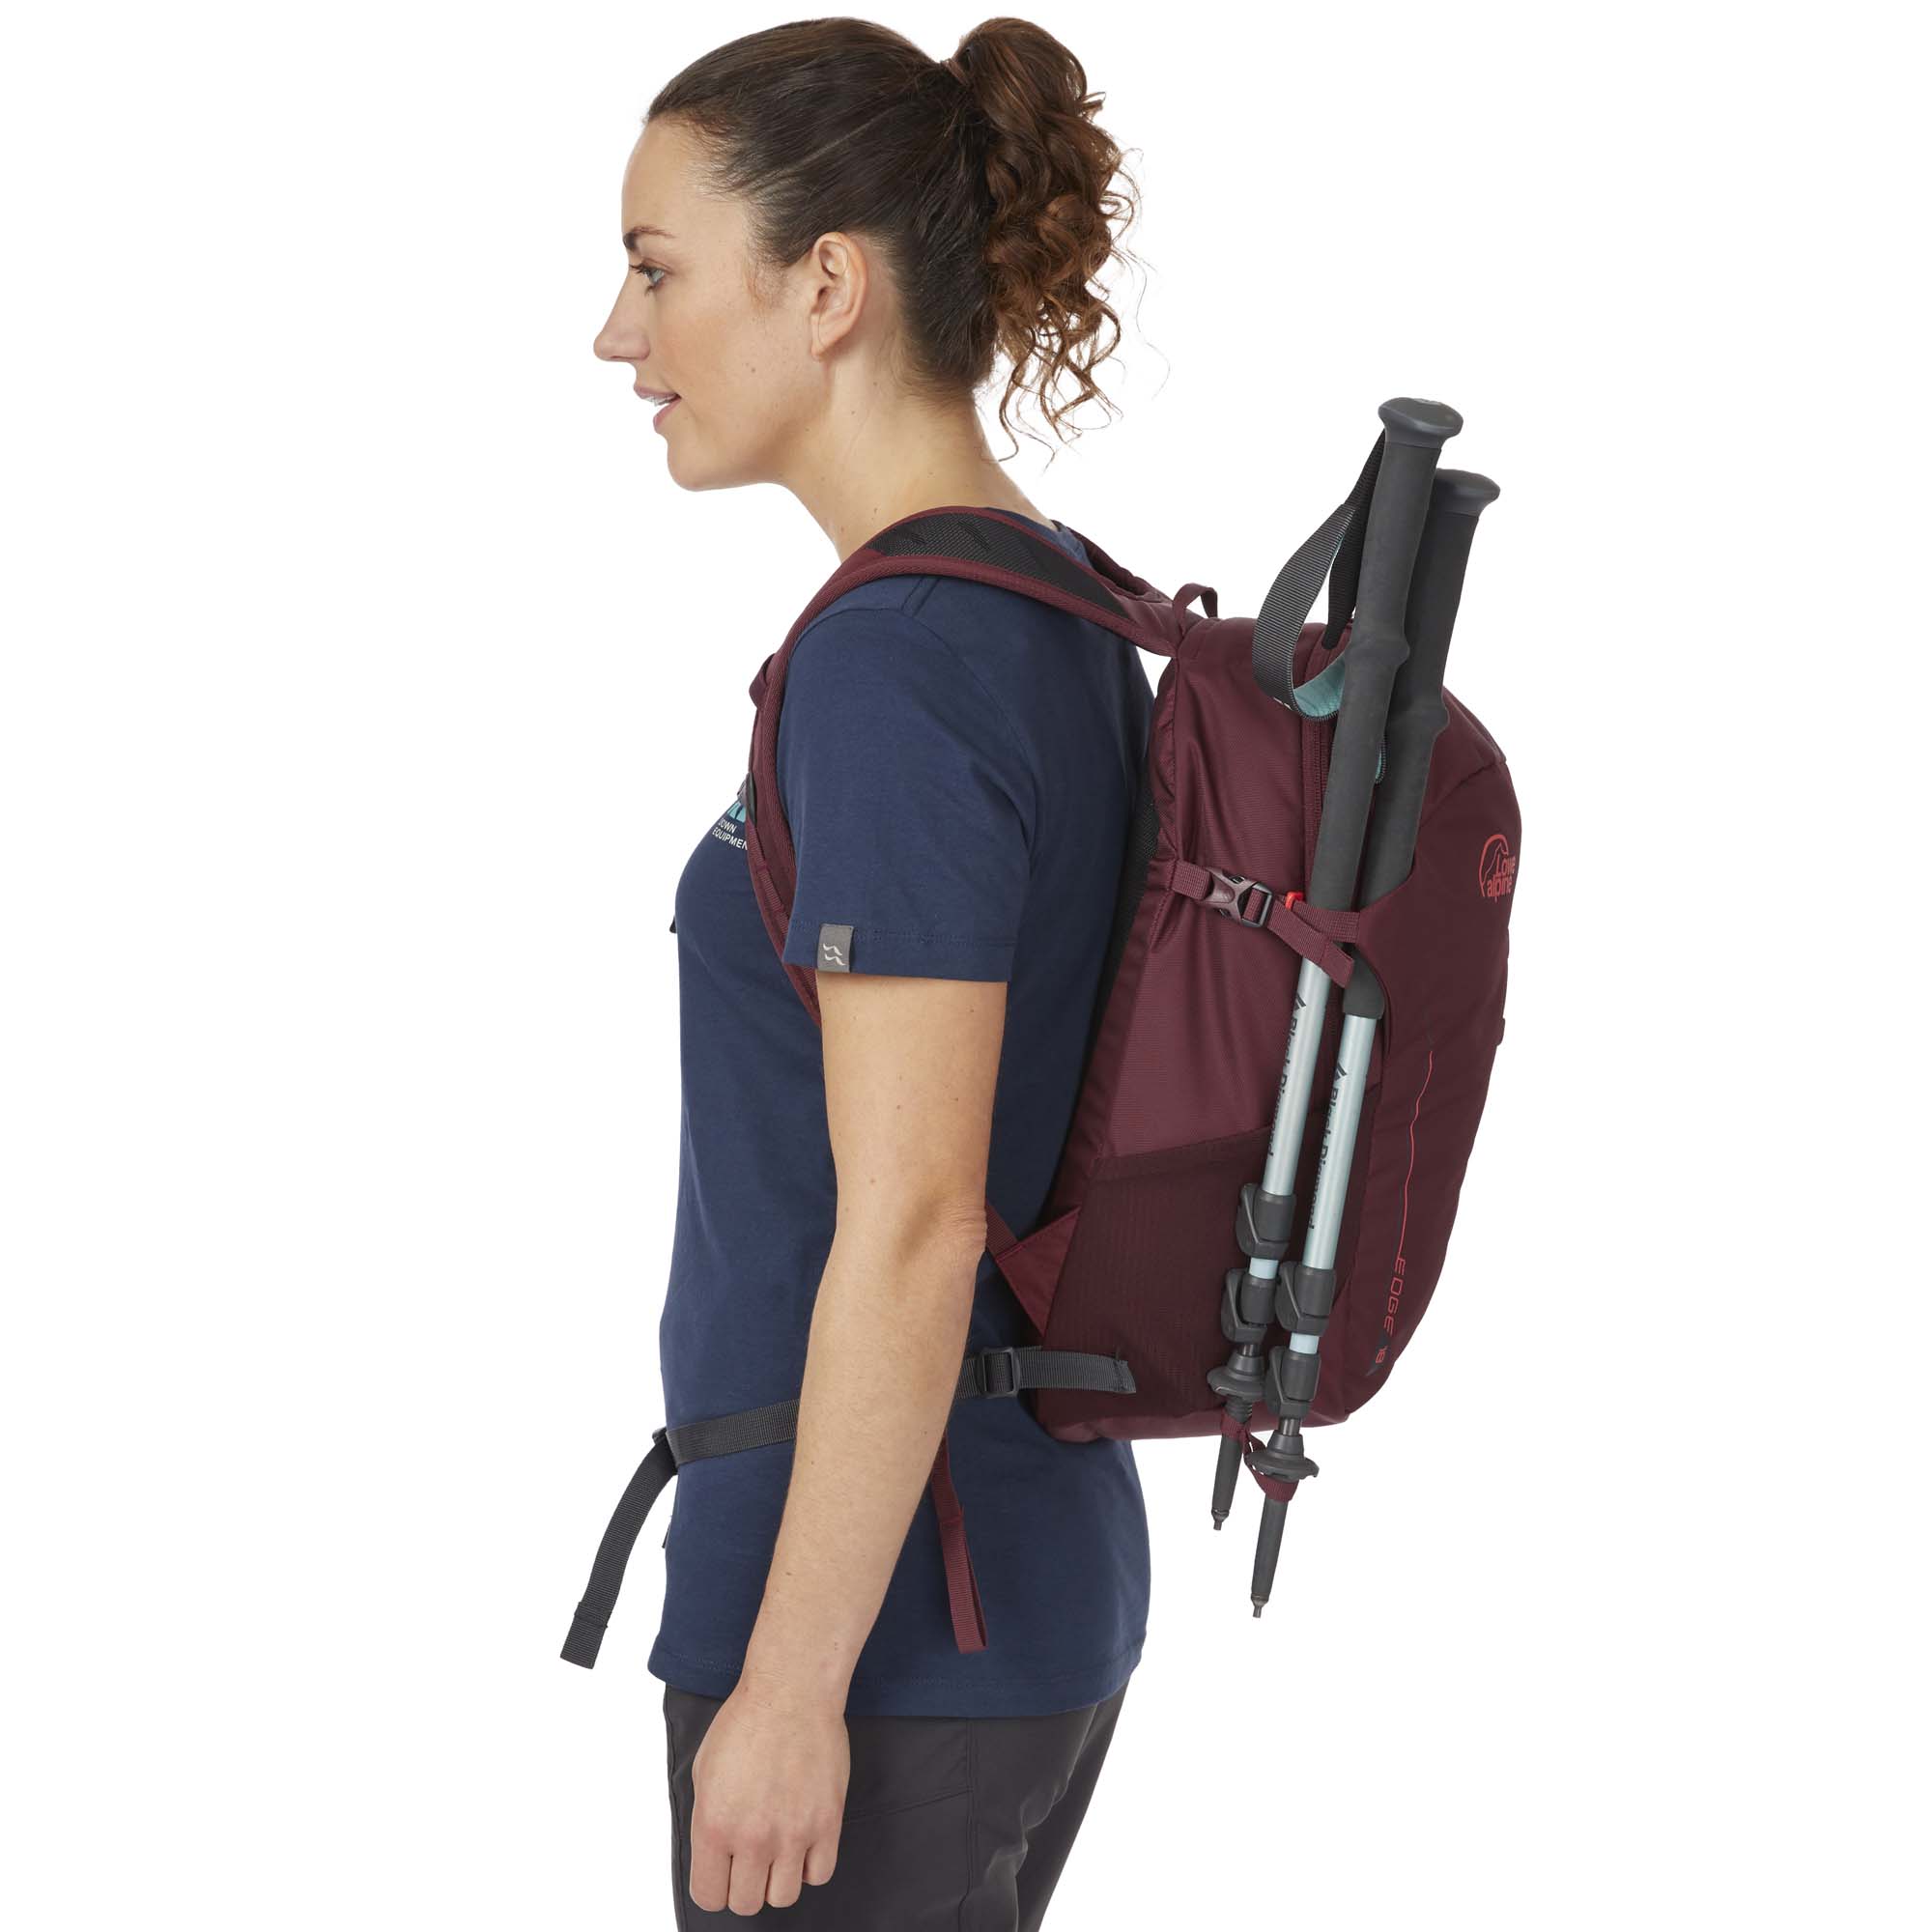 Lowe Alpine Edge 18 Backpack/Day Pack